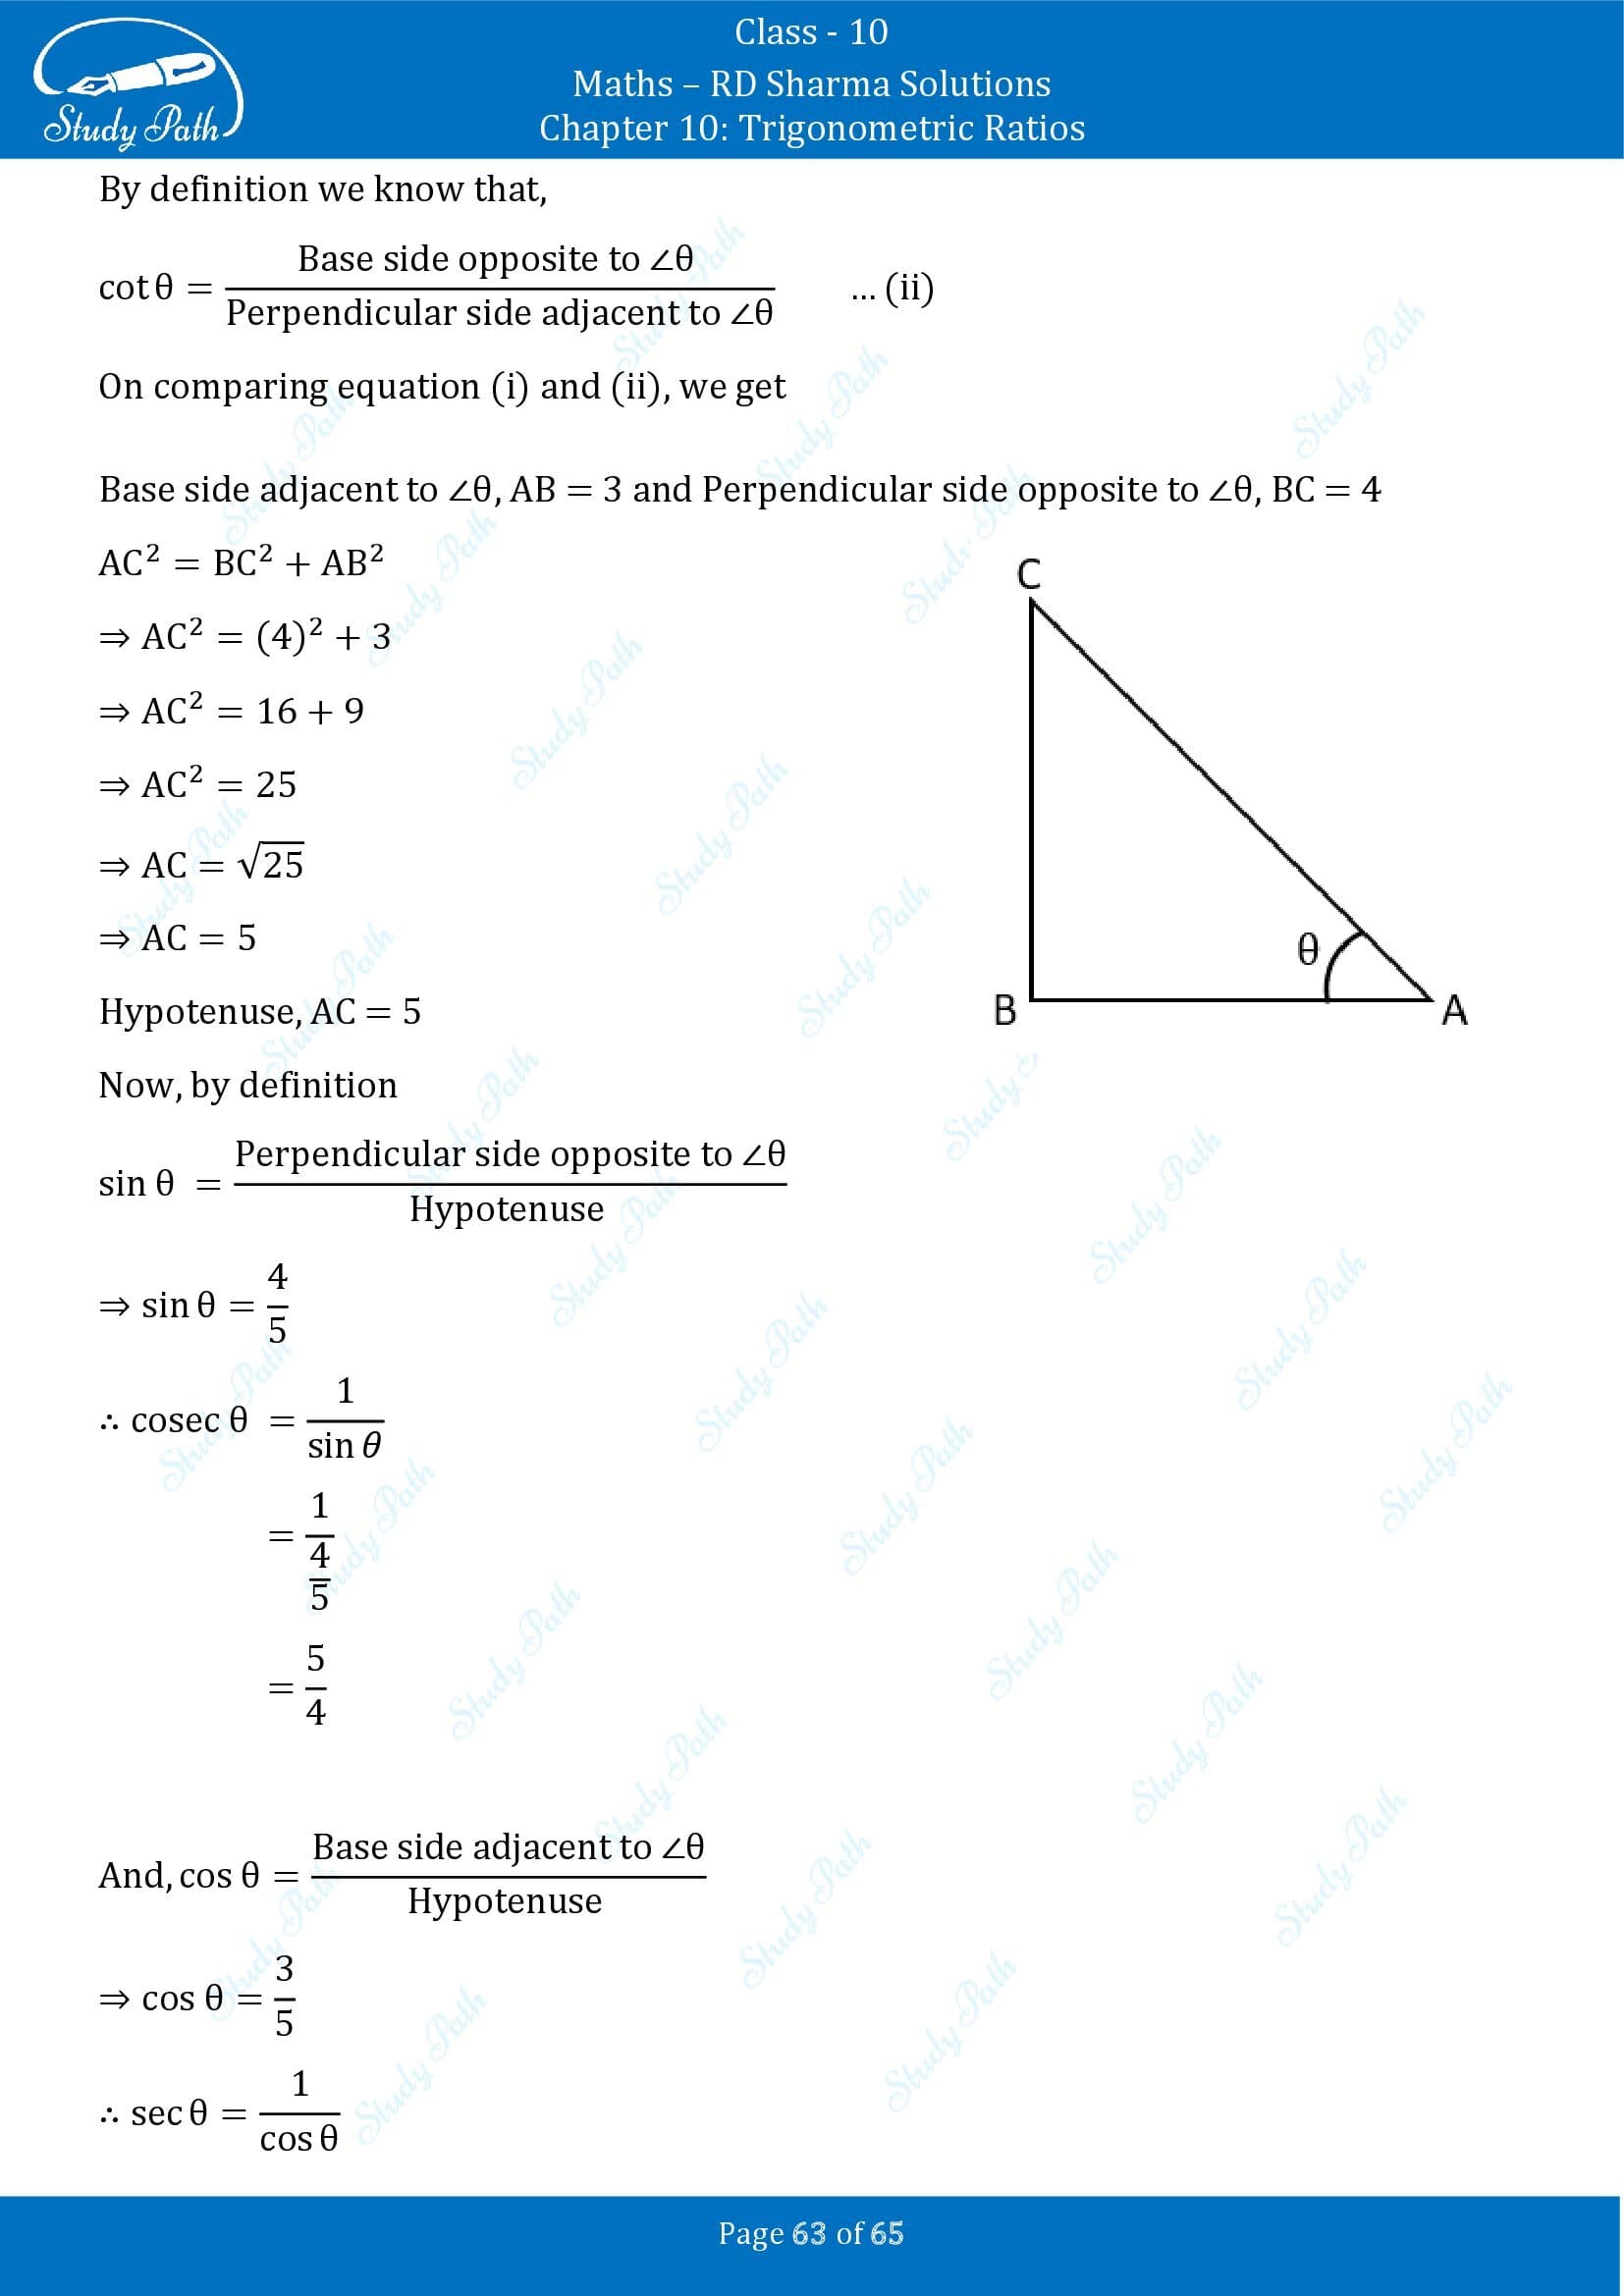 RD Sharma Solutions Class 10 Chapter 10 Trigonometric Ratios Exercise 10.1 00063